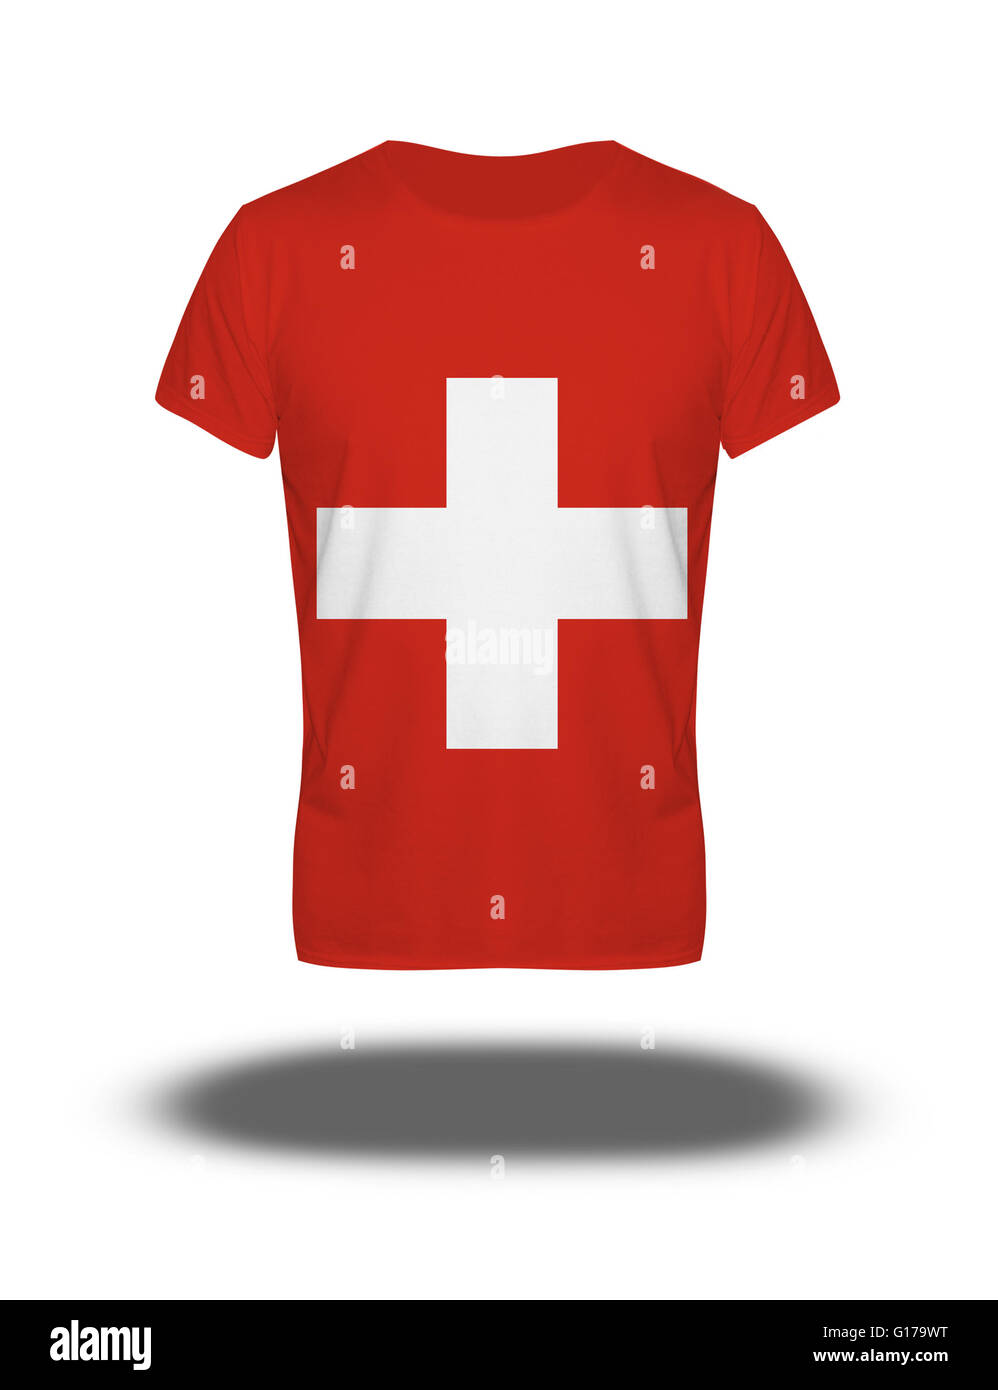 Switzerland flag t-shirt white background with shadow Stock Photo - Alamy